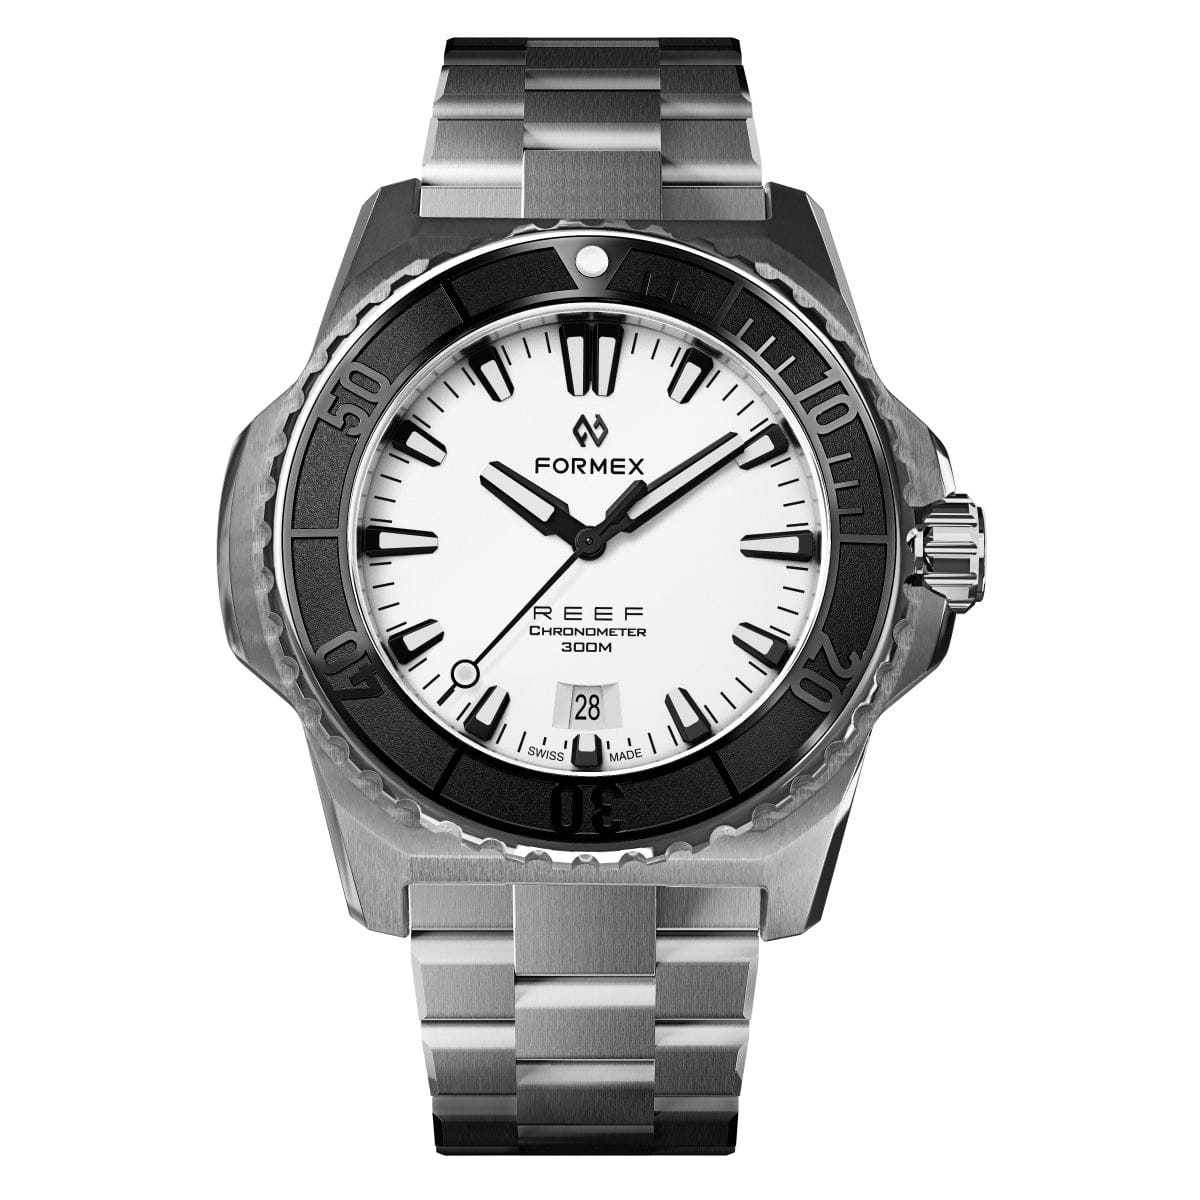 Formex REEF Automatic Chronometer - White Dial / Black Bezel